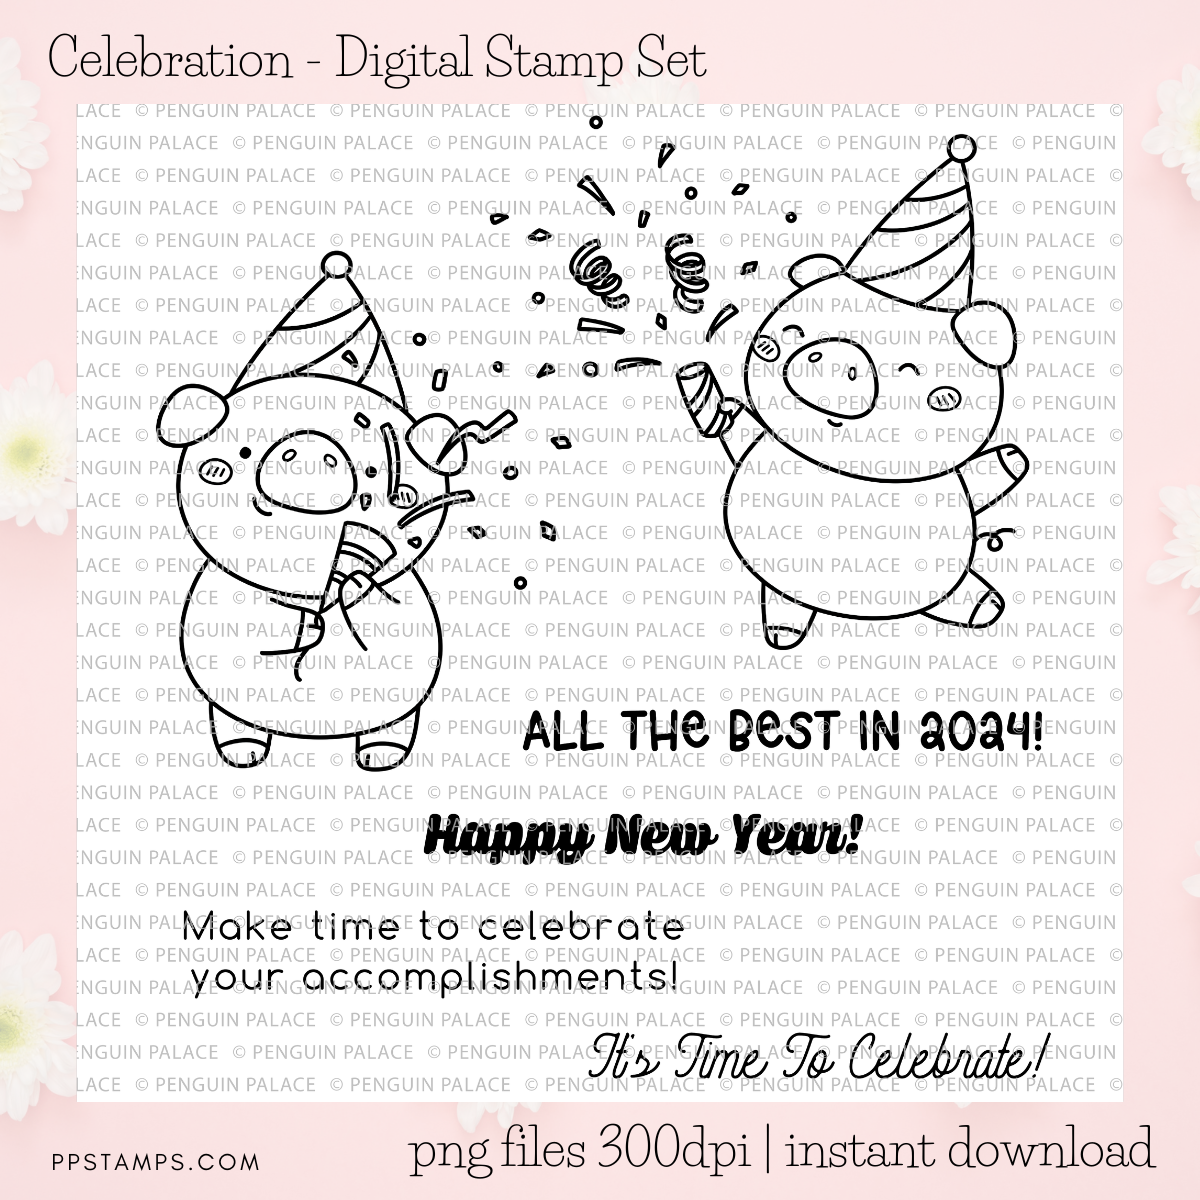 Celebration - Digital Stamp